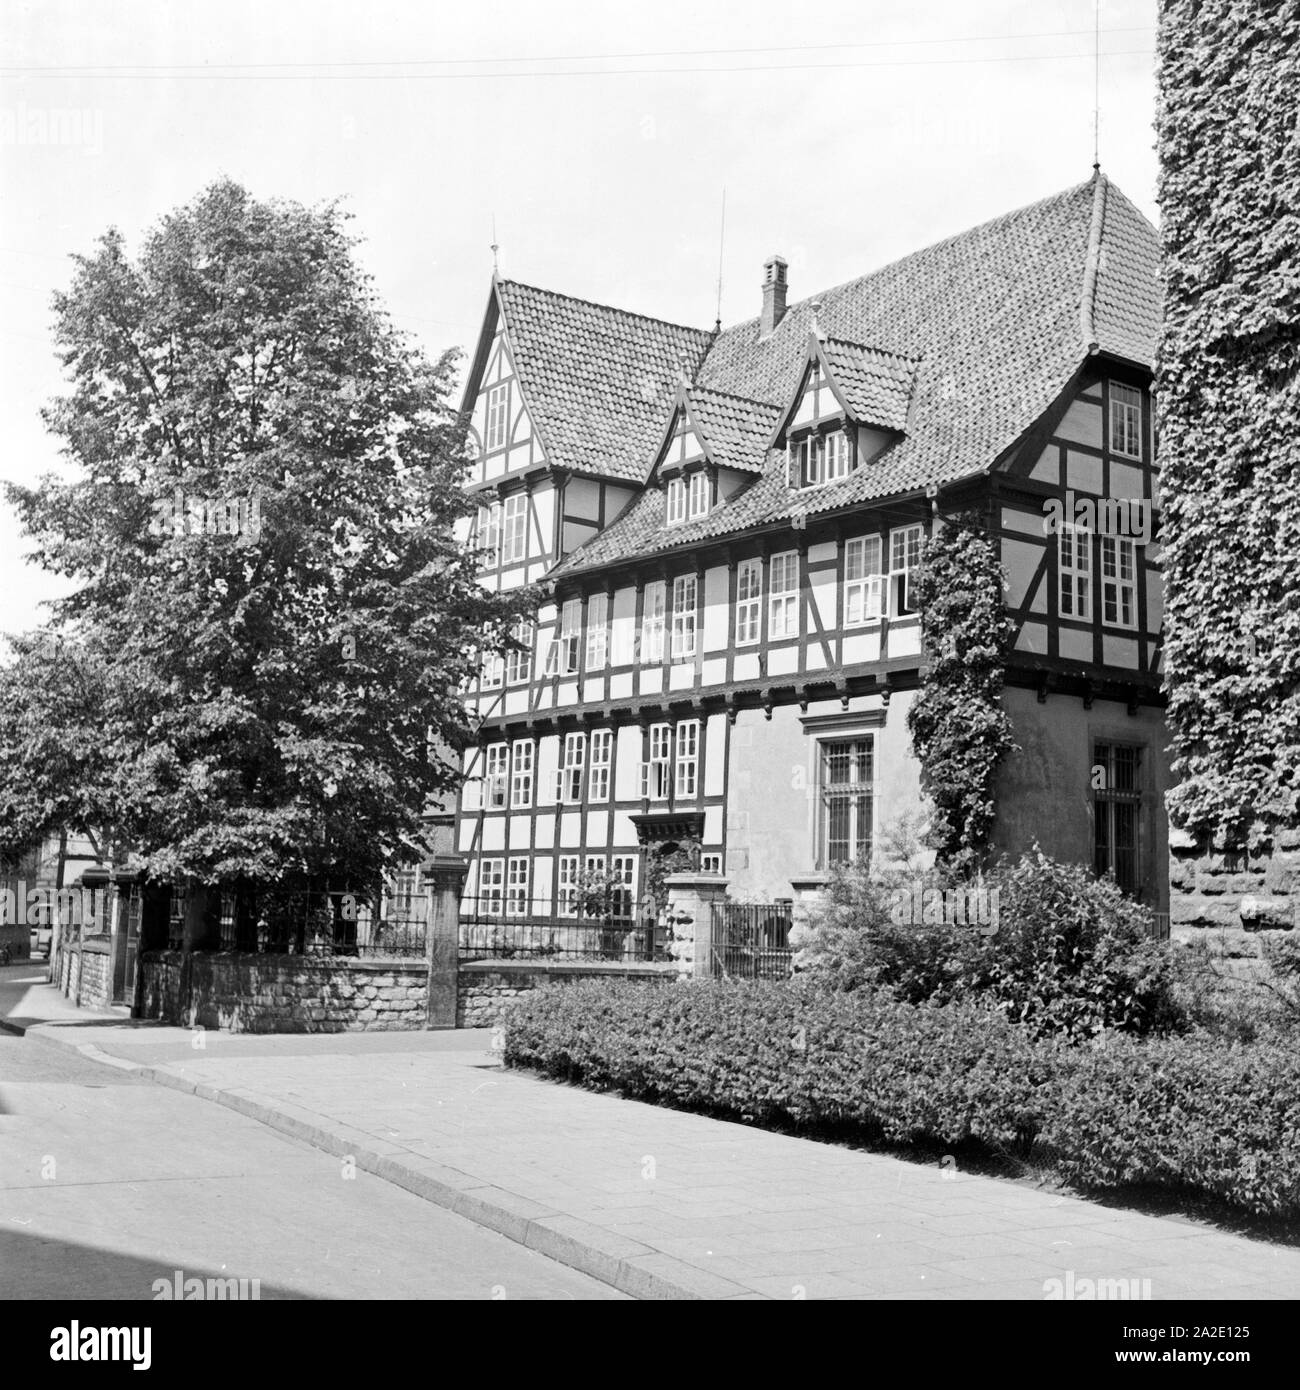 Der Hardenberger Hof als Städtisches Museum in Göttingen, Deutschland 1930er Jahre. The Goettingen city museum, Germany 1930s. Stock Photo